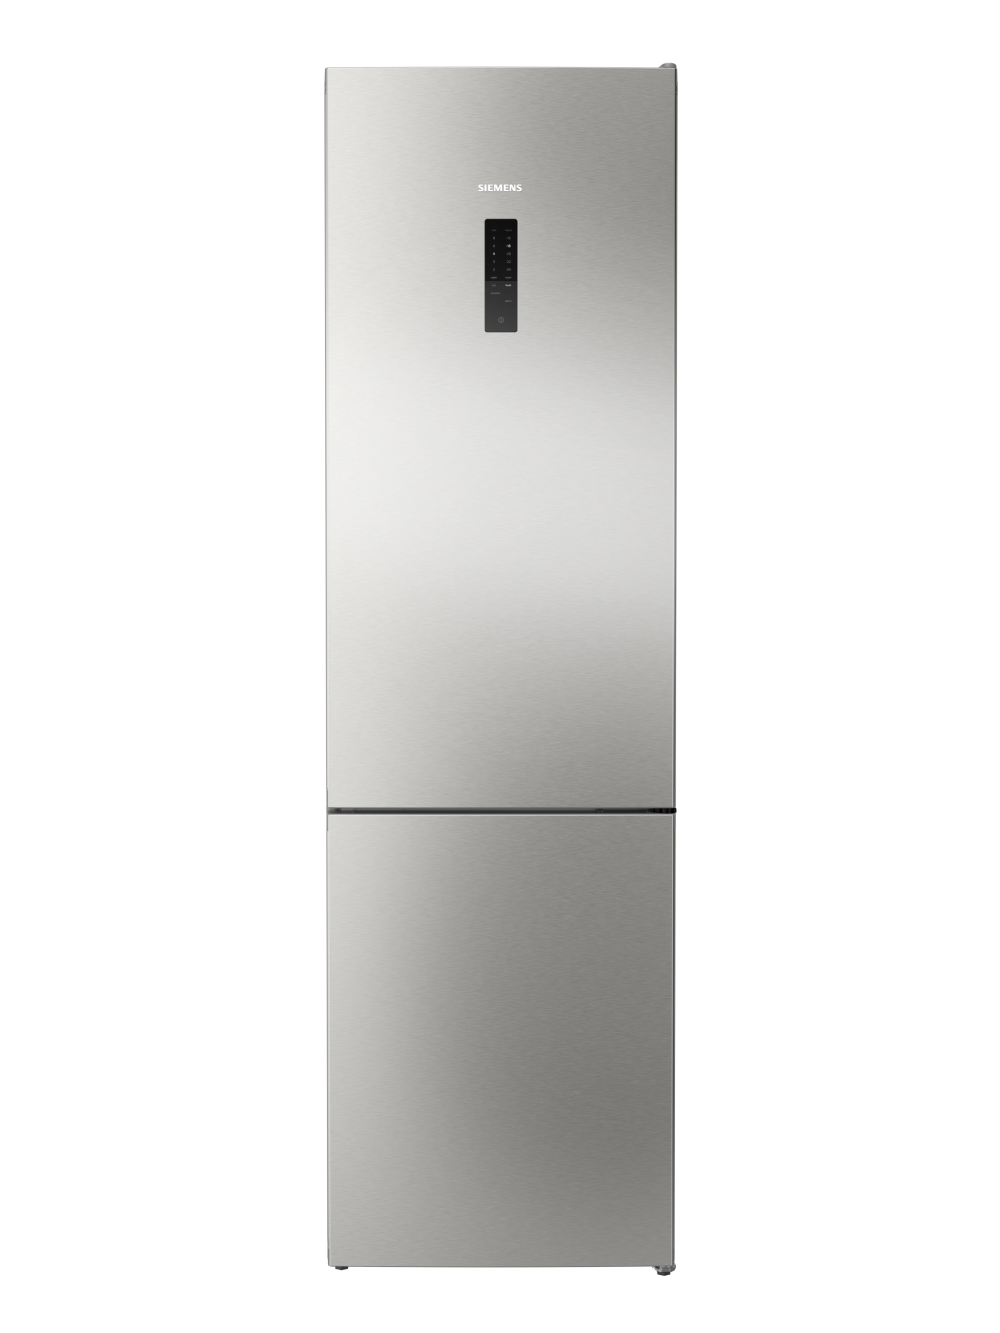 Siemens KG39NXIBF iQ300 Freestanding Fridge Freezer featured image